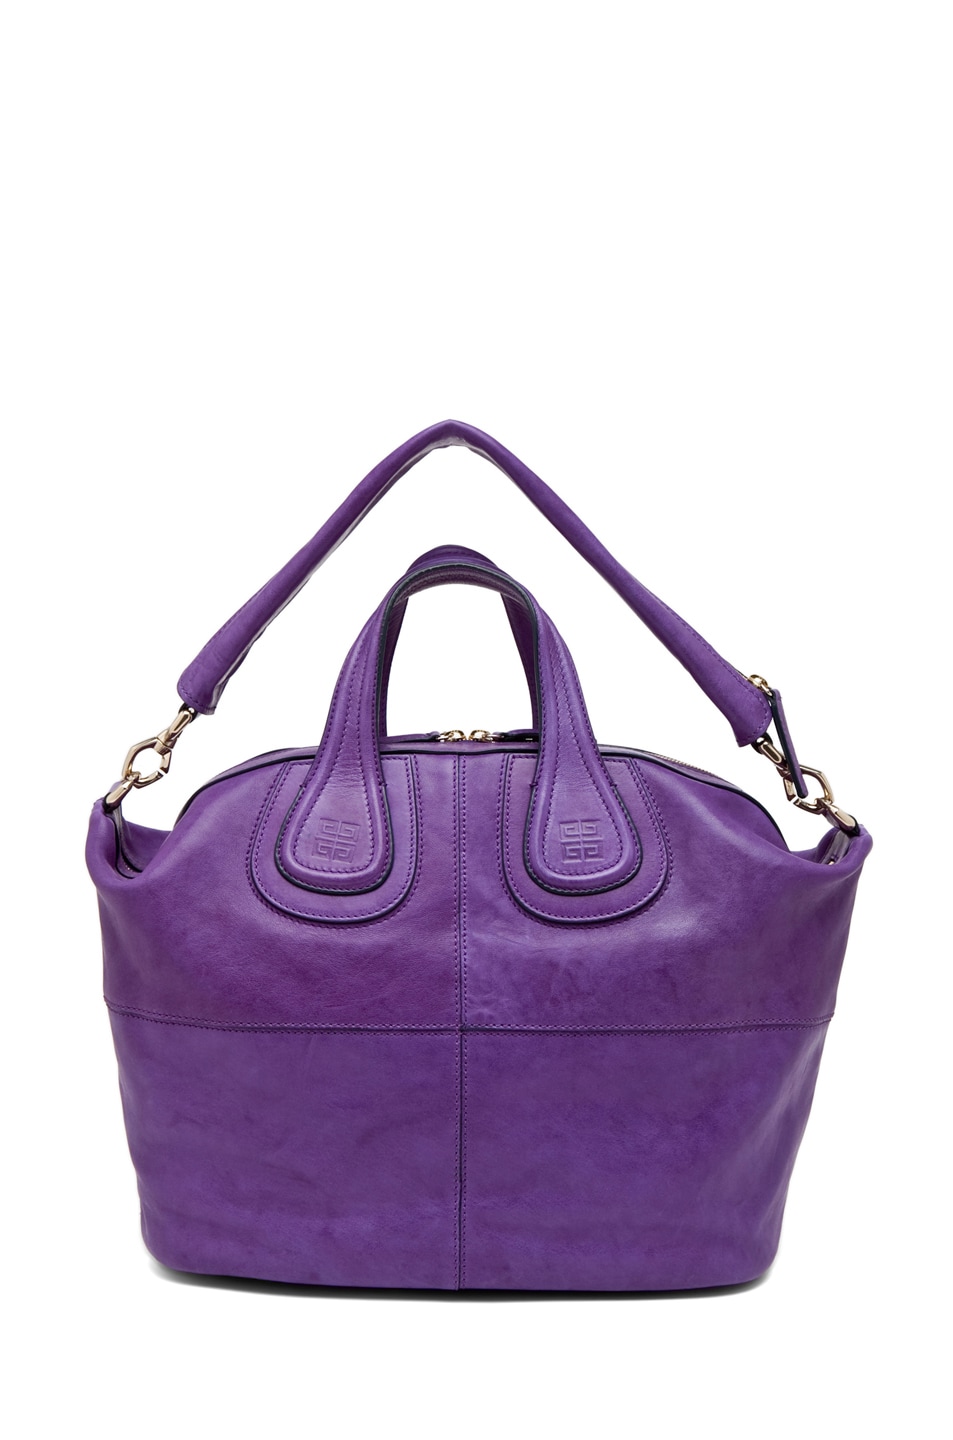 Givenchy Nightingale Medium in Purple | FWRD